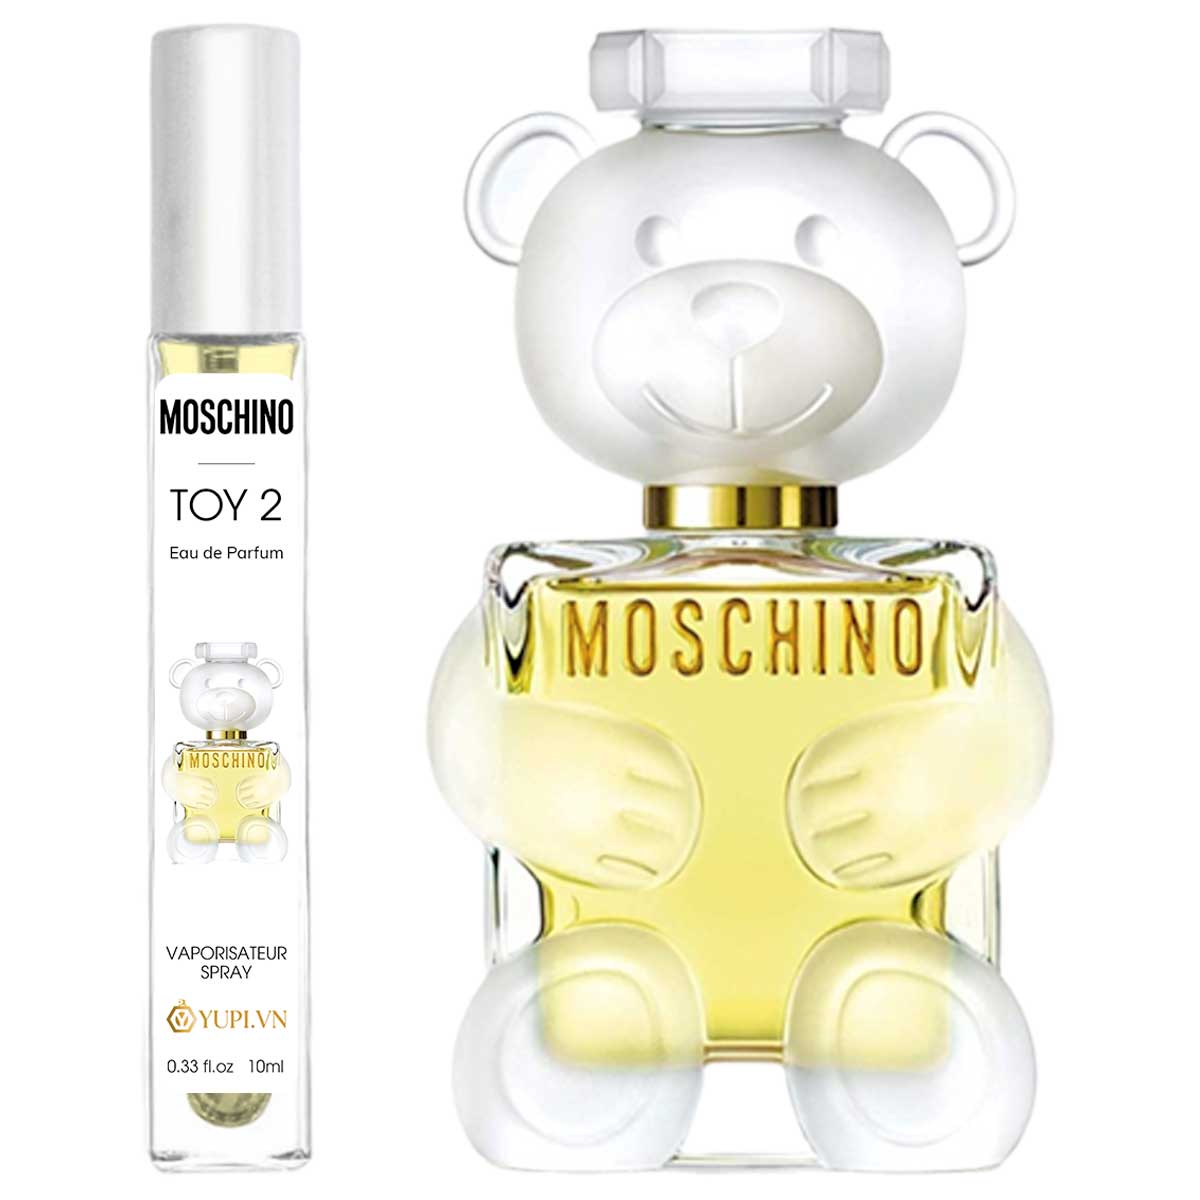 Moschino Toy 2 Eau de Parfum Chiết 10ml